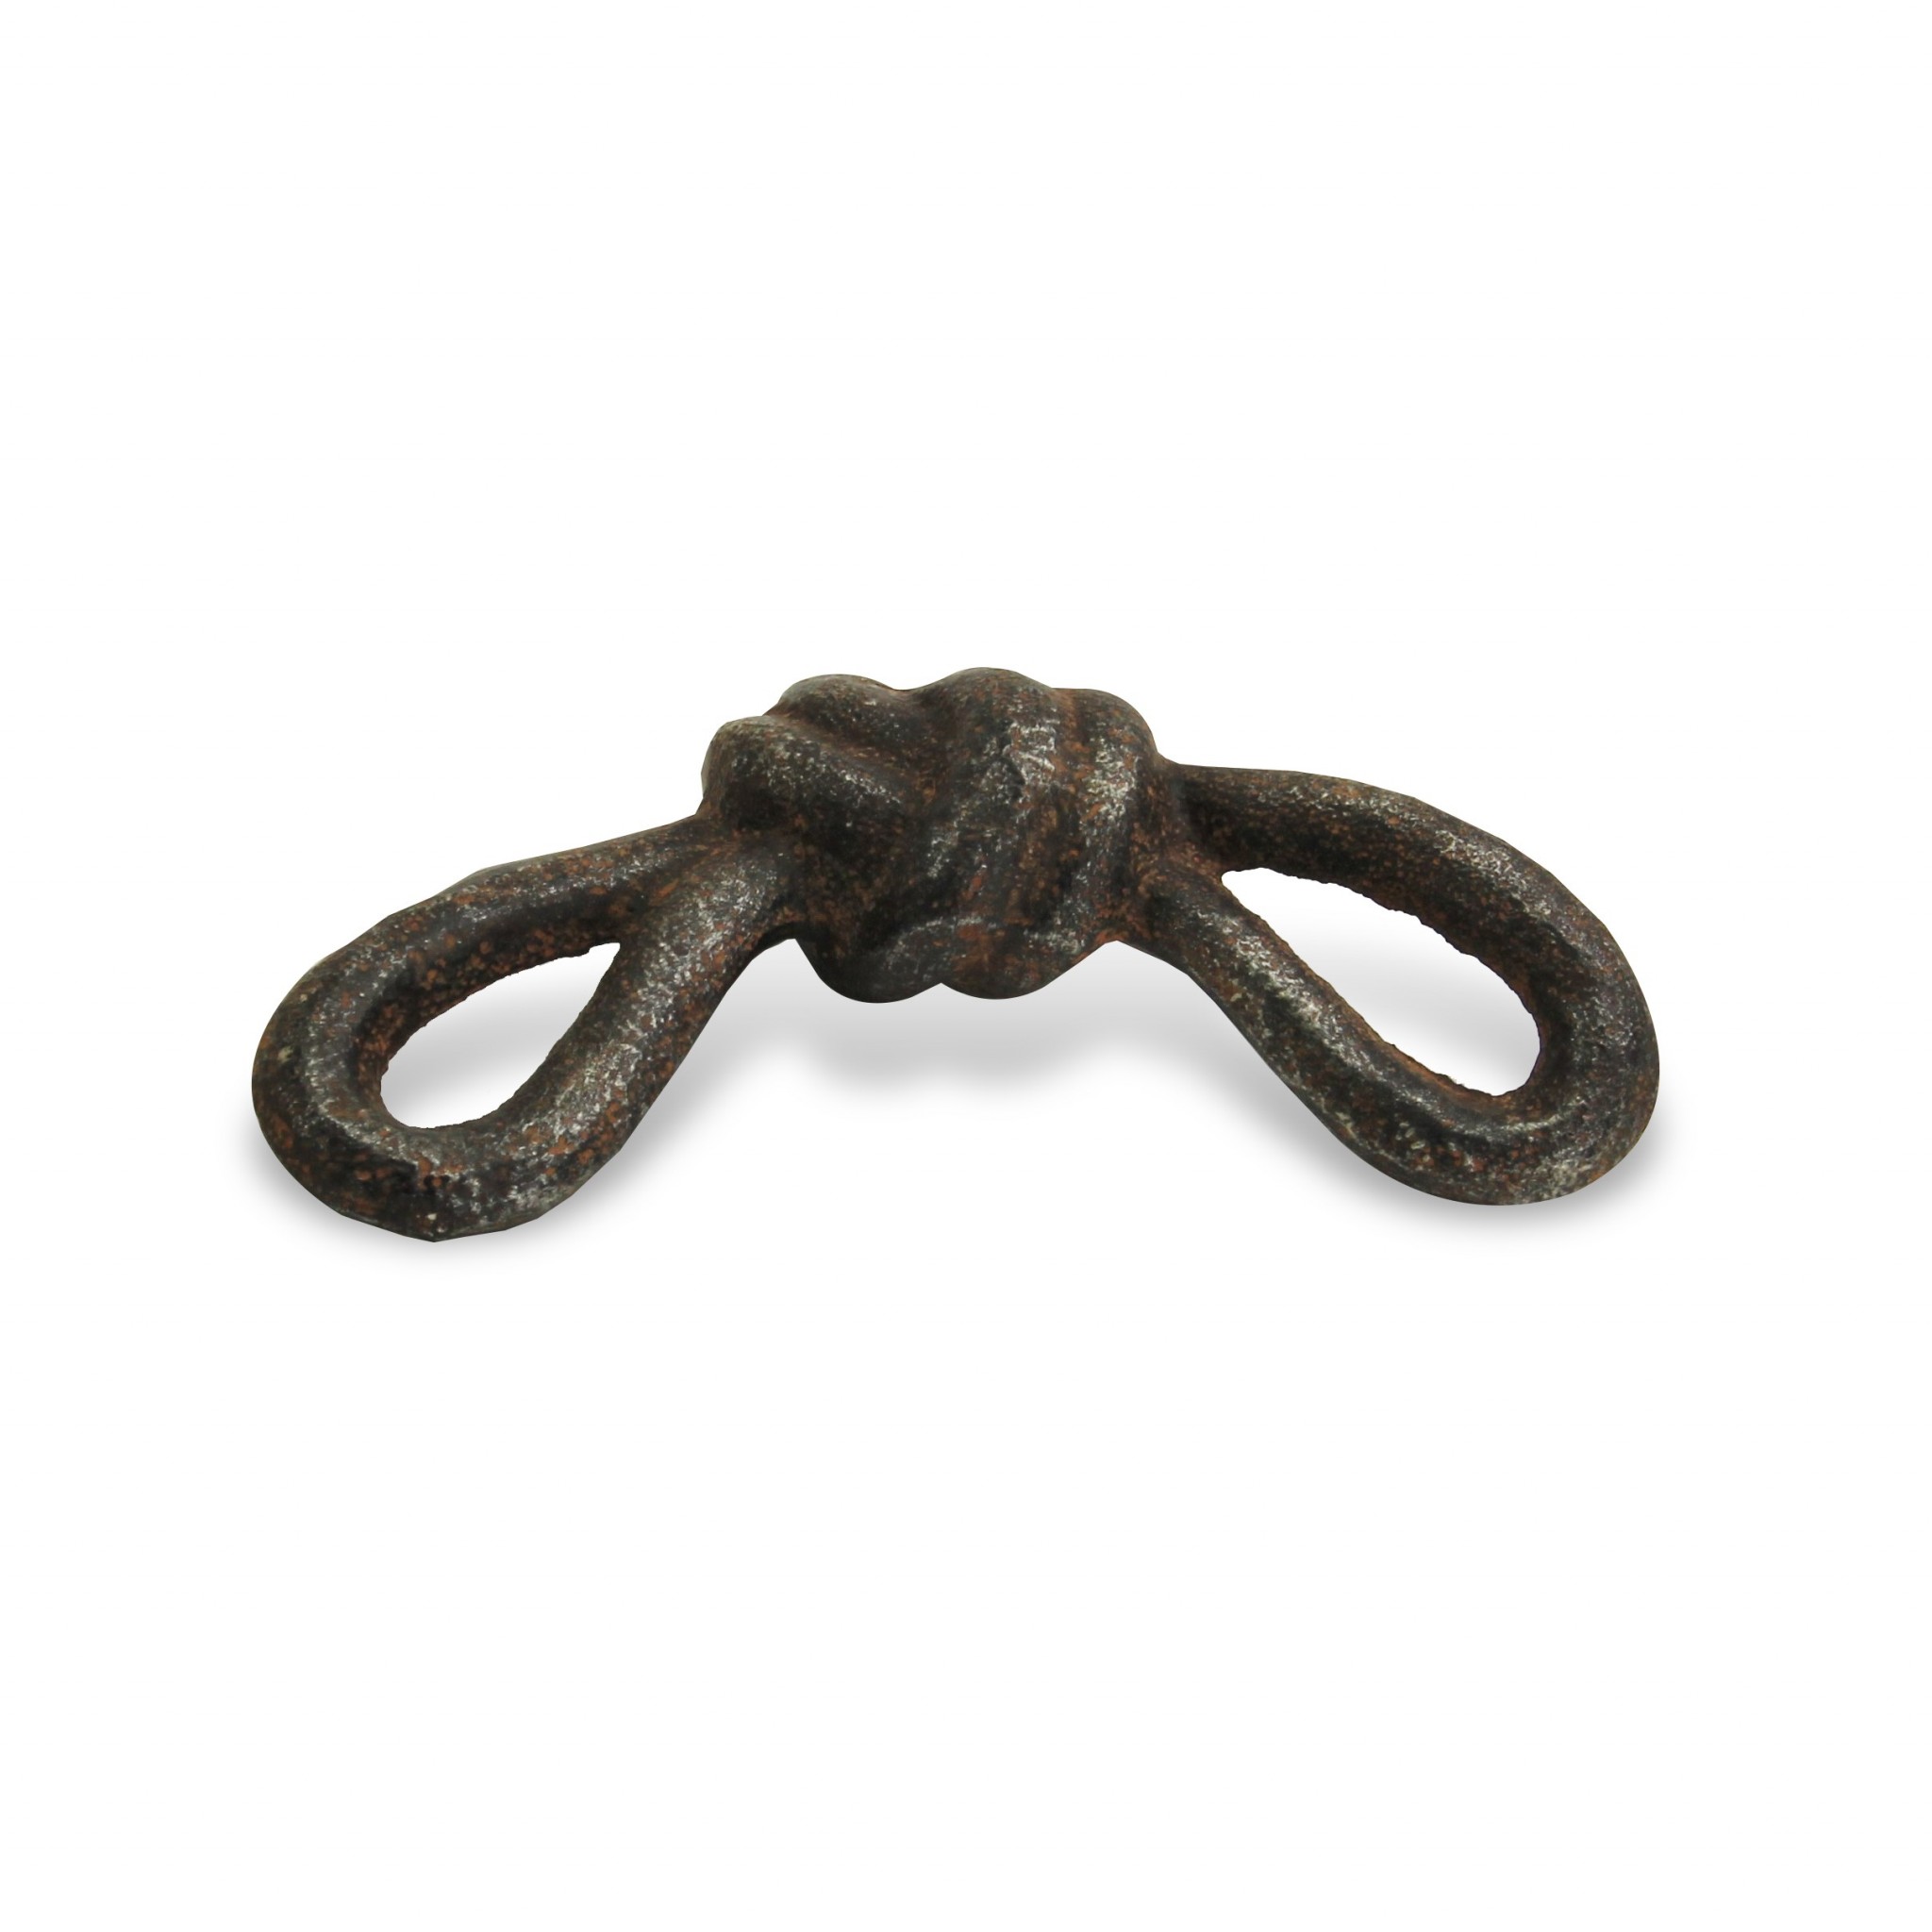 Rustic Gray Cast Iron Knot Sculpture